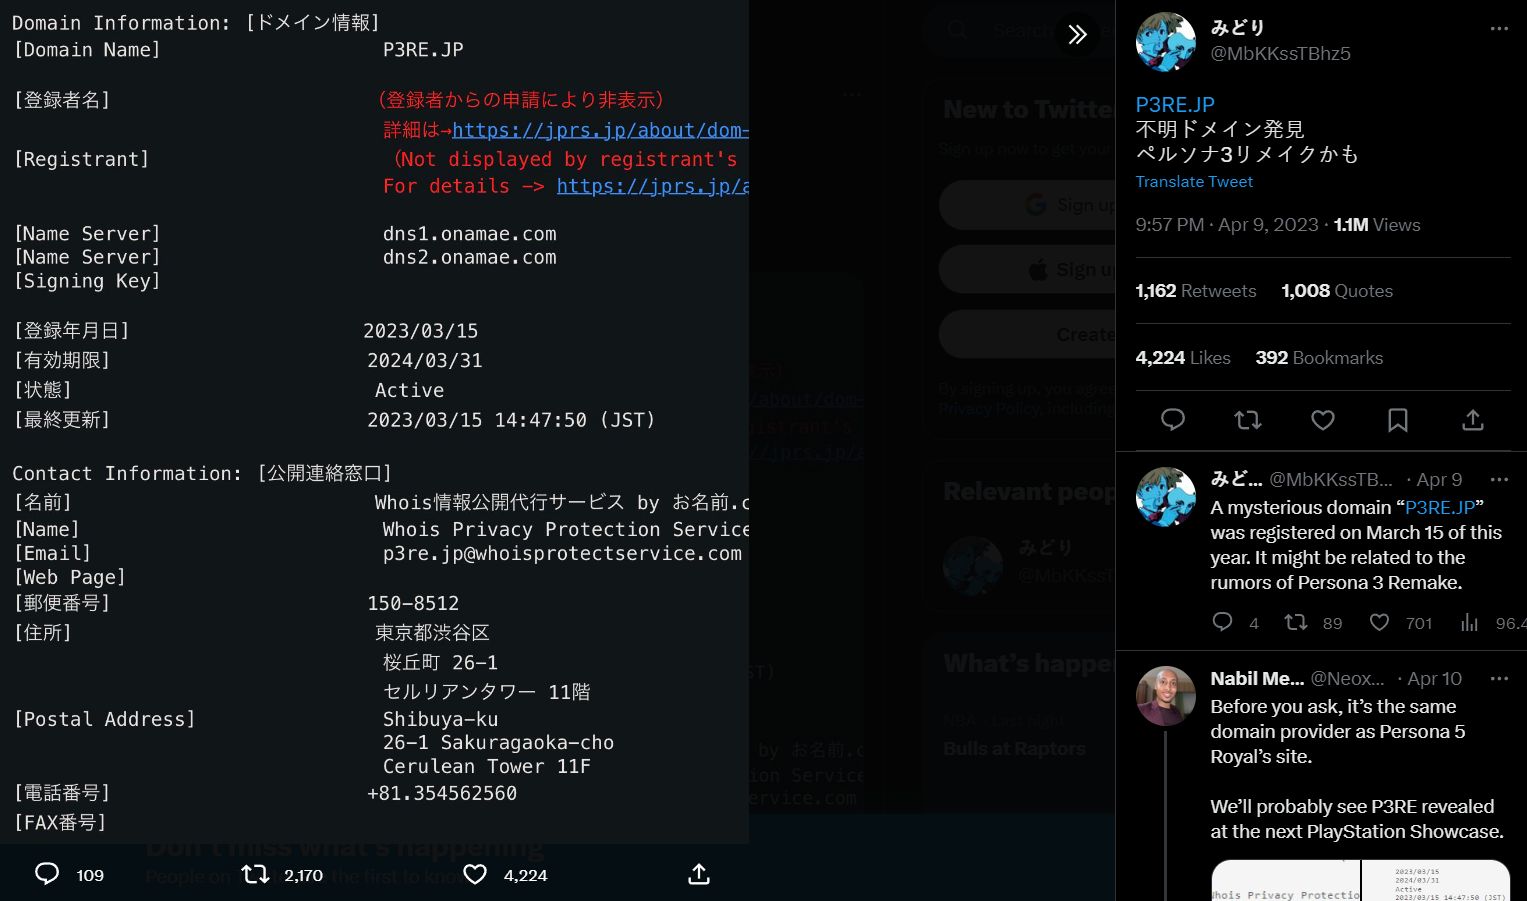 MbKKssTBhz5 uncovers an alleged Persona 3 remake website via Twitter